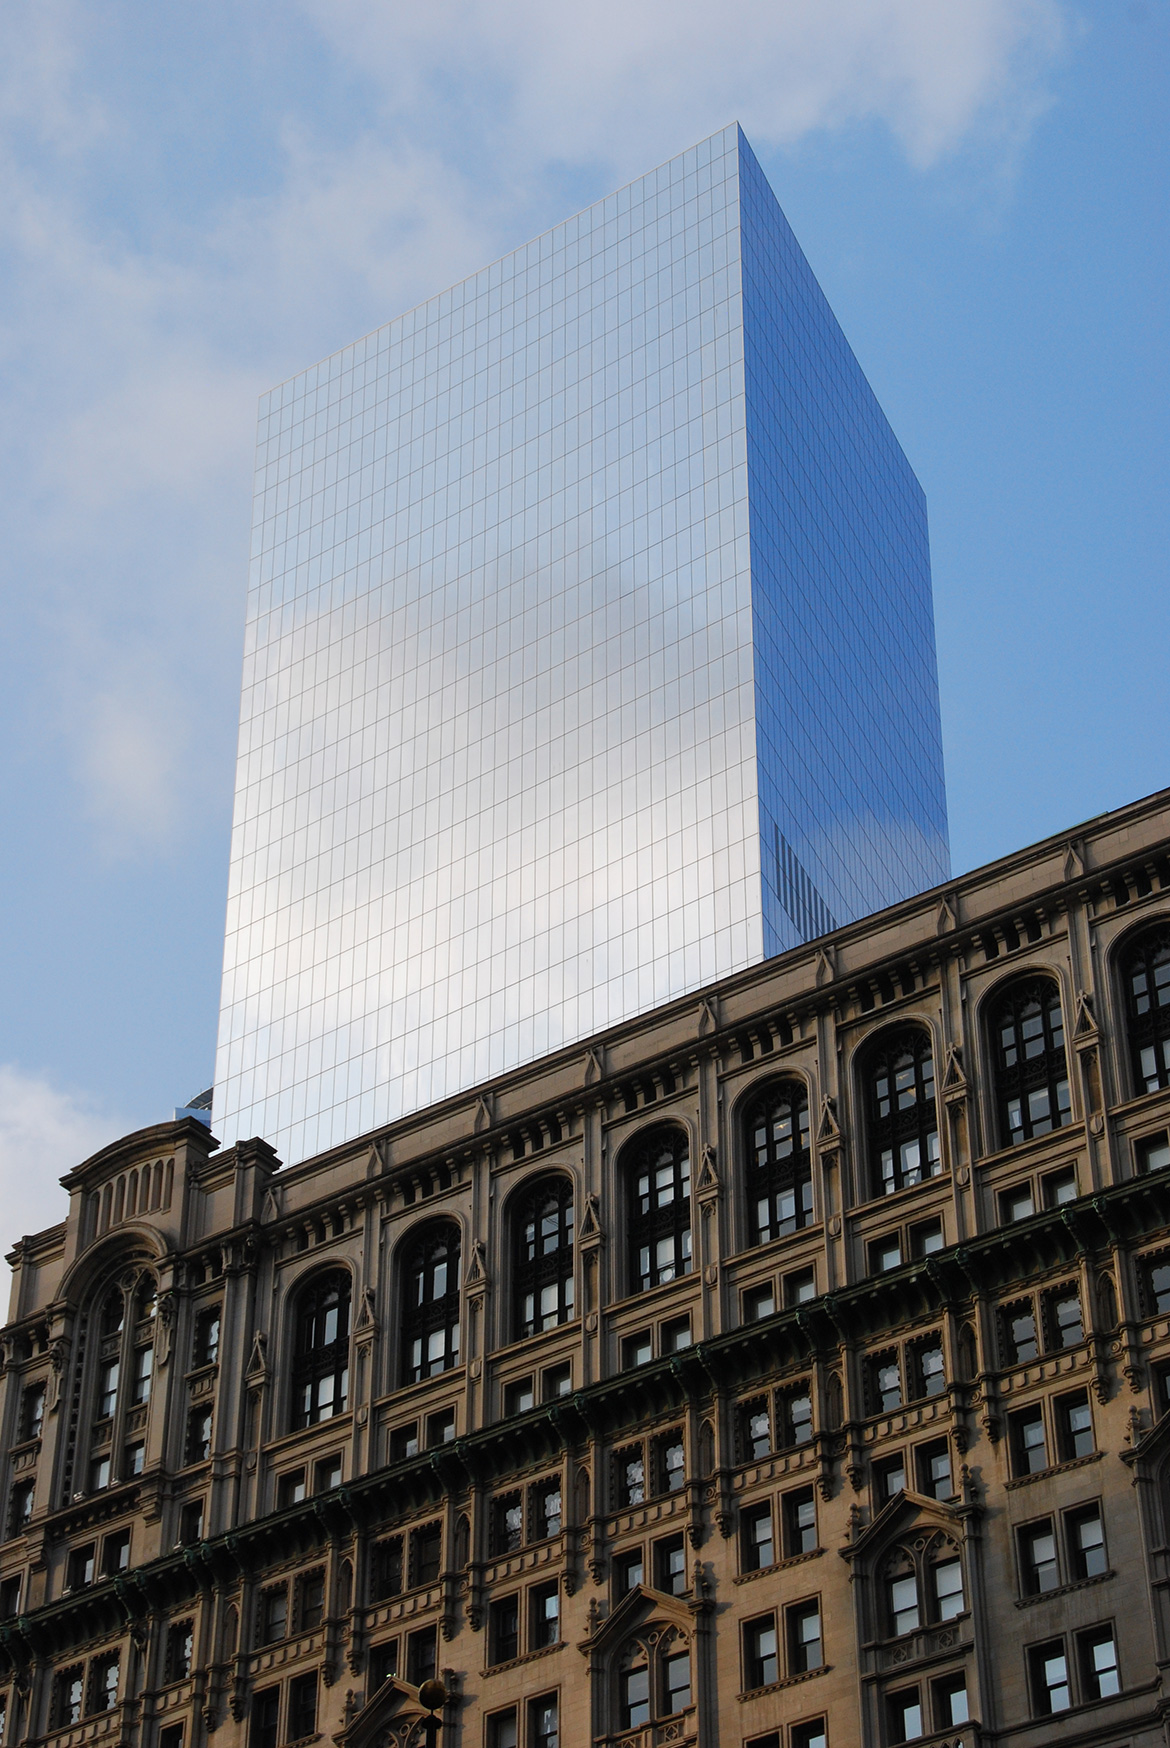 Building facade in New York